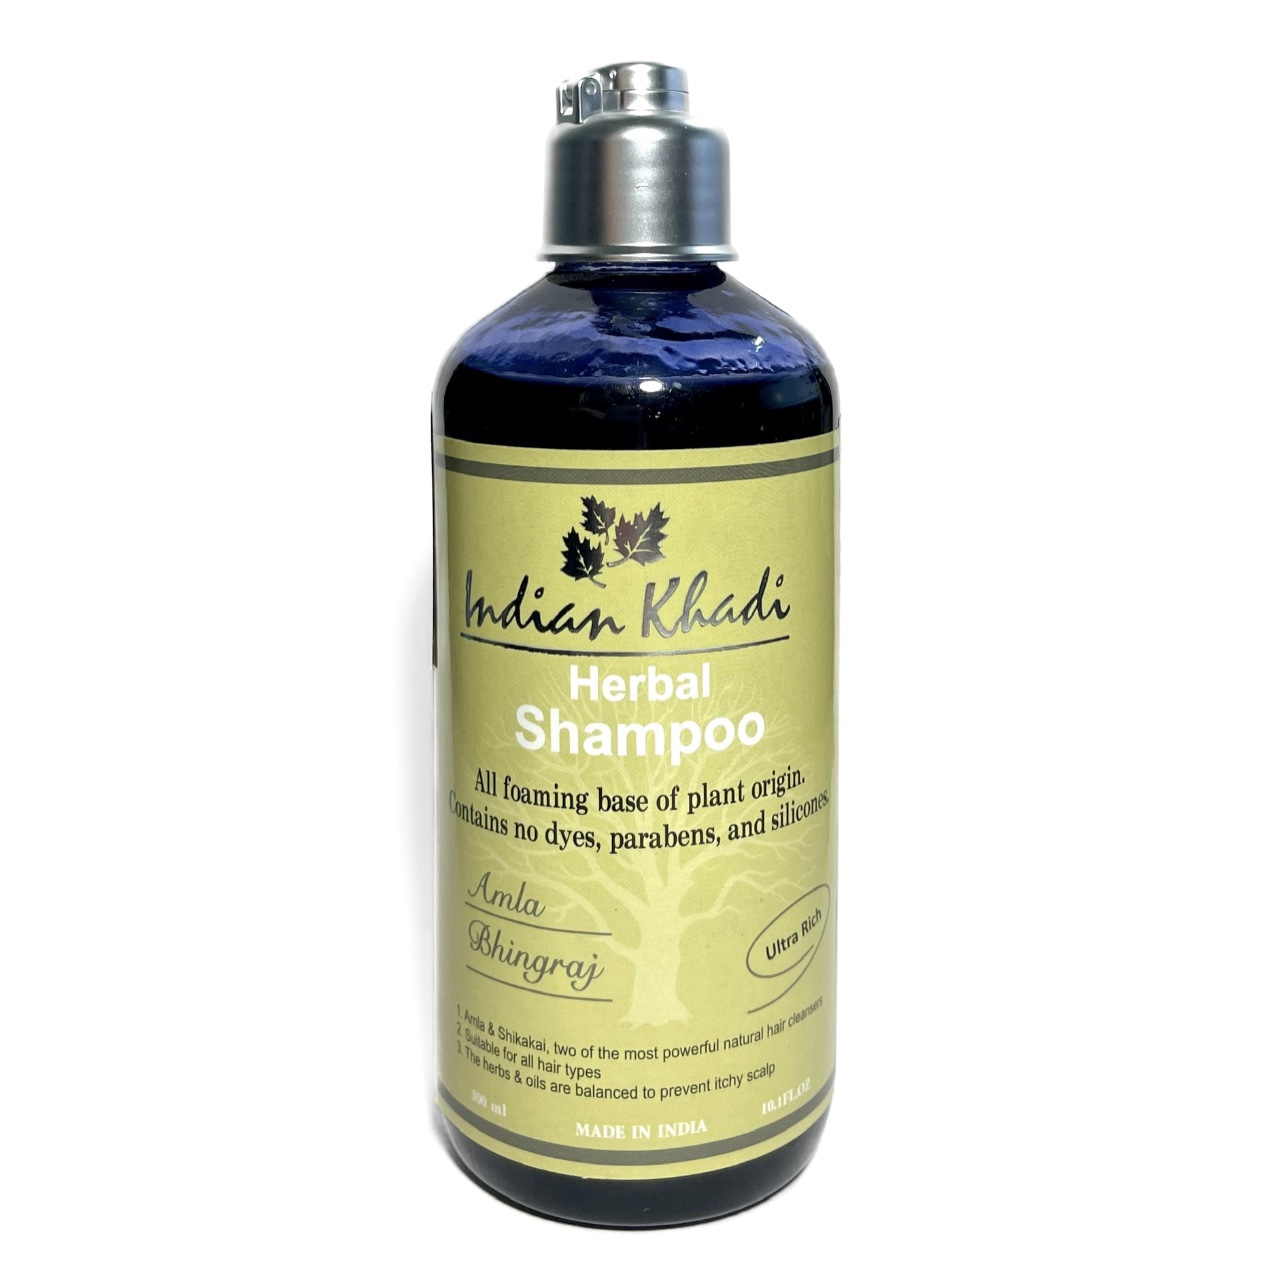 Herbal Shampoo AMLA & BHRINGRAJ, Indian Khadi (Травяной Шампунь АМЛА И БРИНГРАДЖ, Ультра питание, Индиан Кхади), 300 мл.